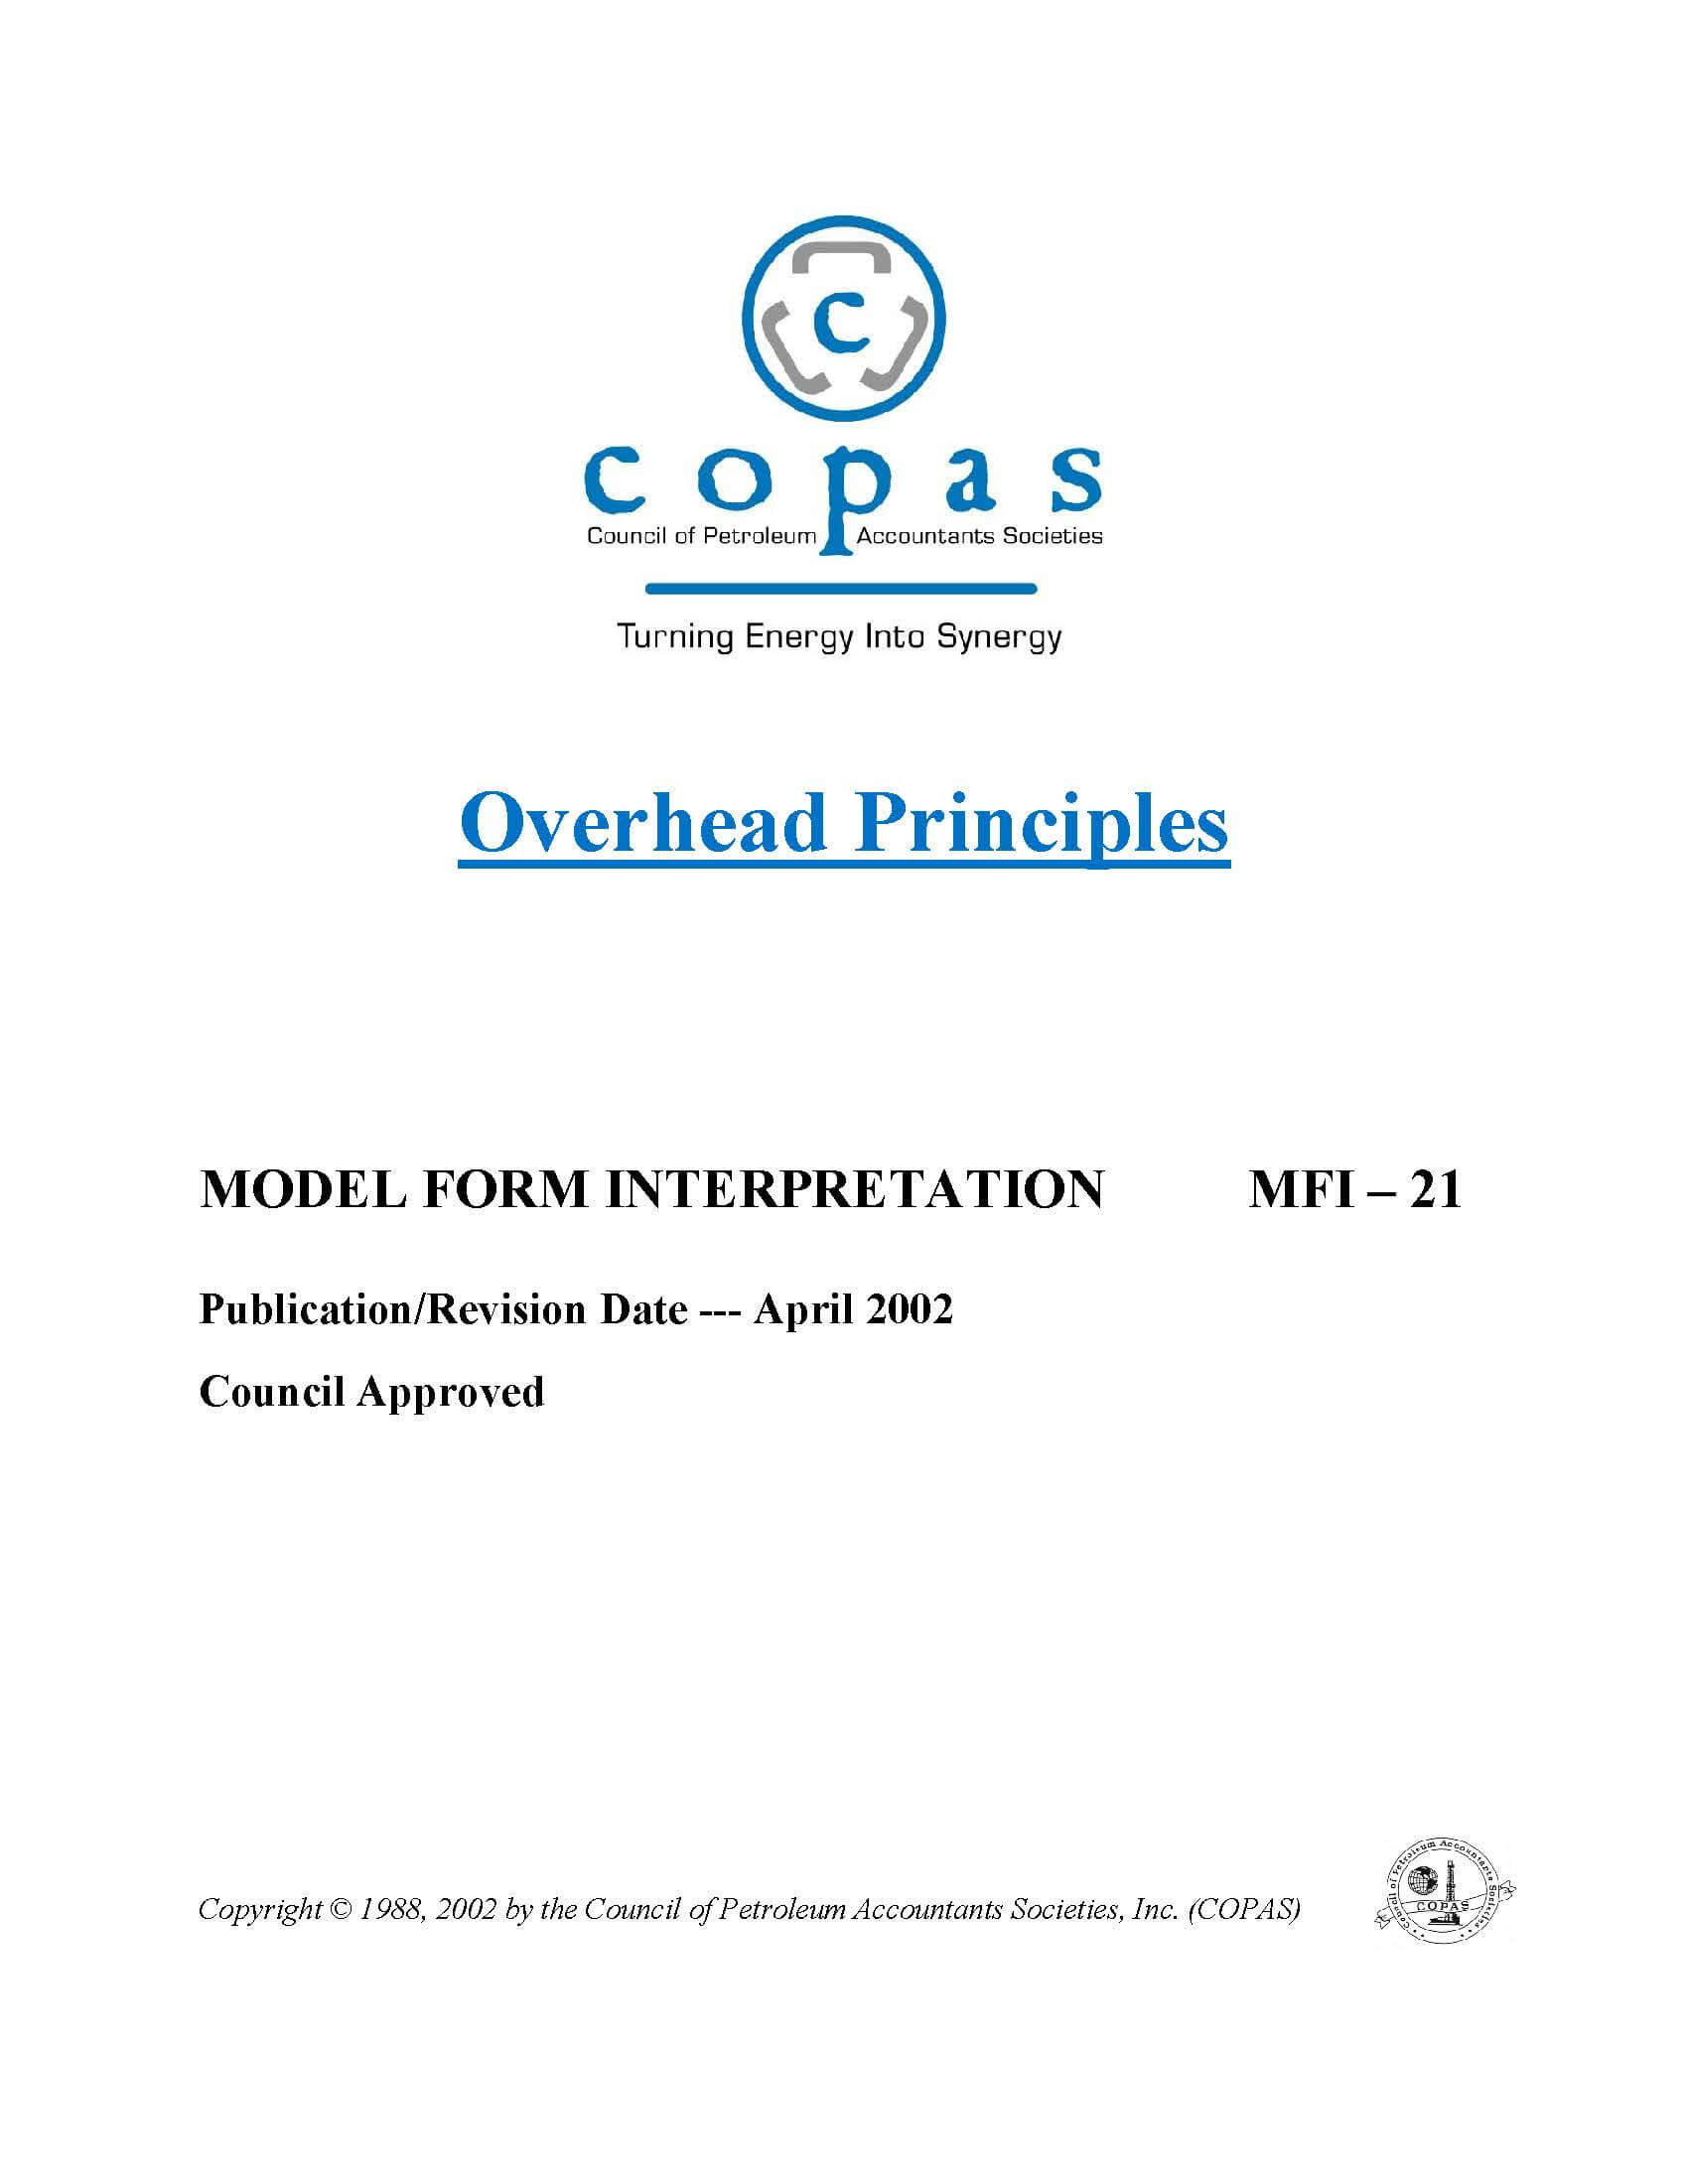 MFI-21 Overhead Principles - products MFI 21 Overhead Principles - Council of Petroleum Accountants Societies